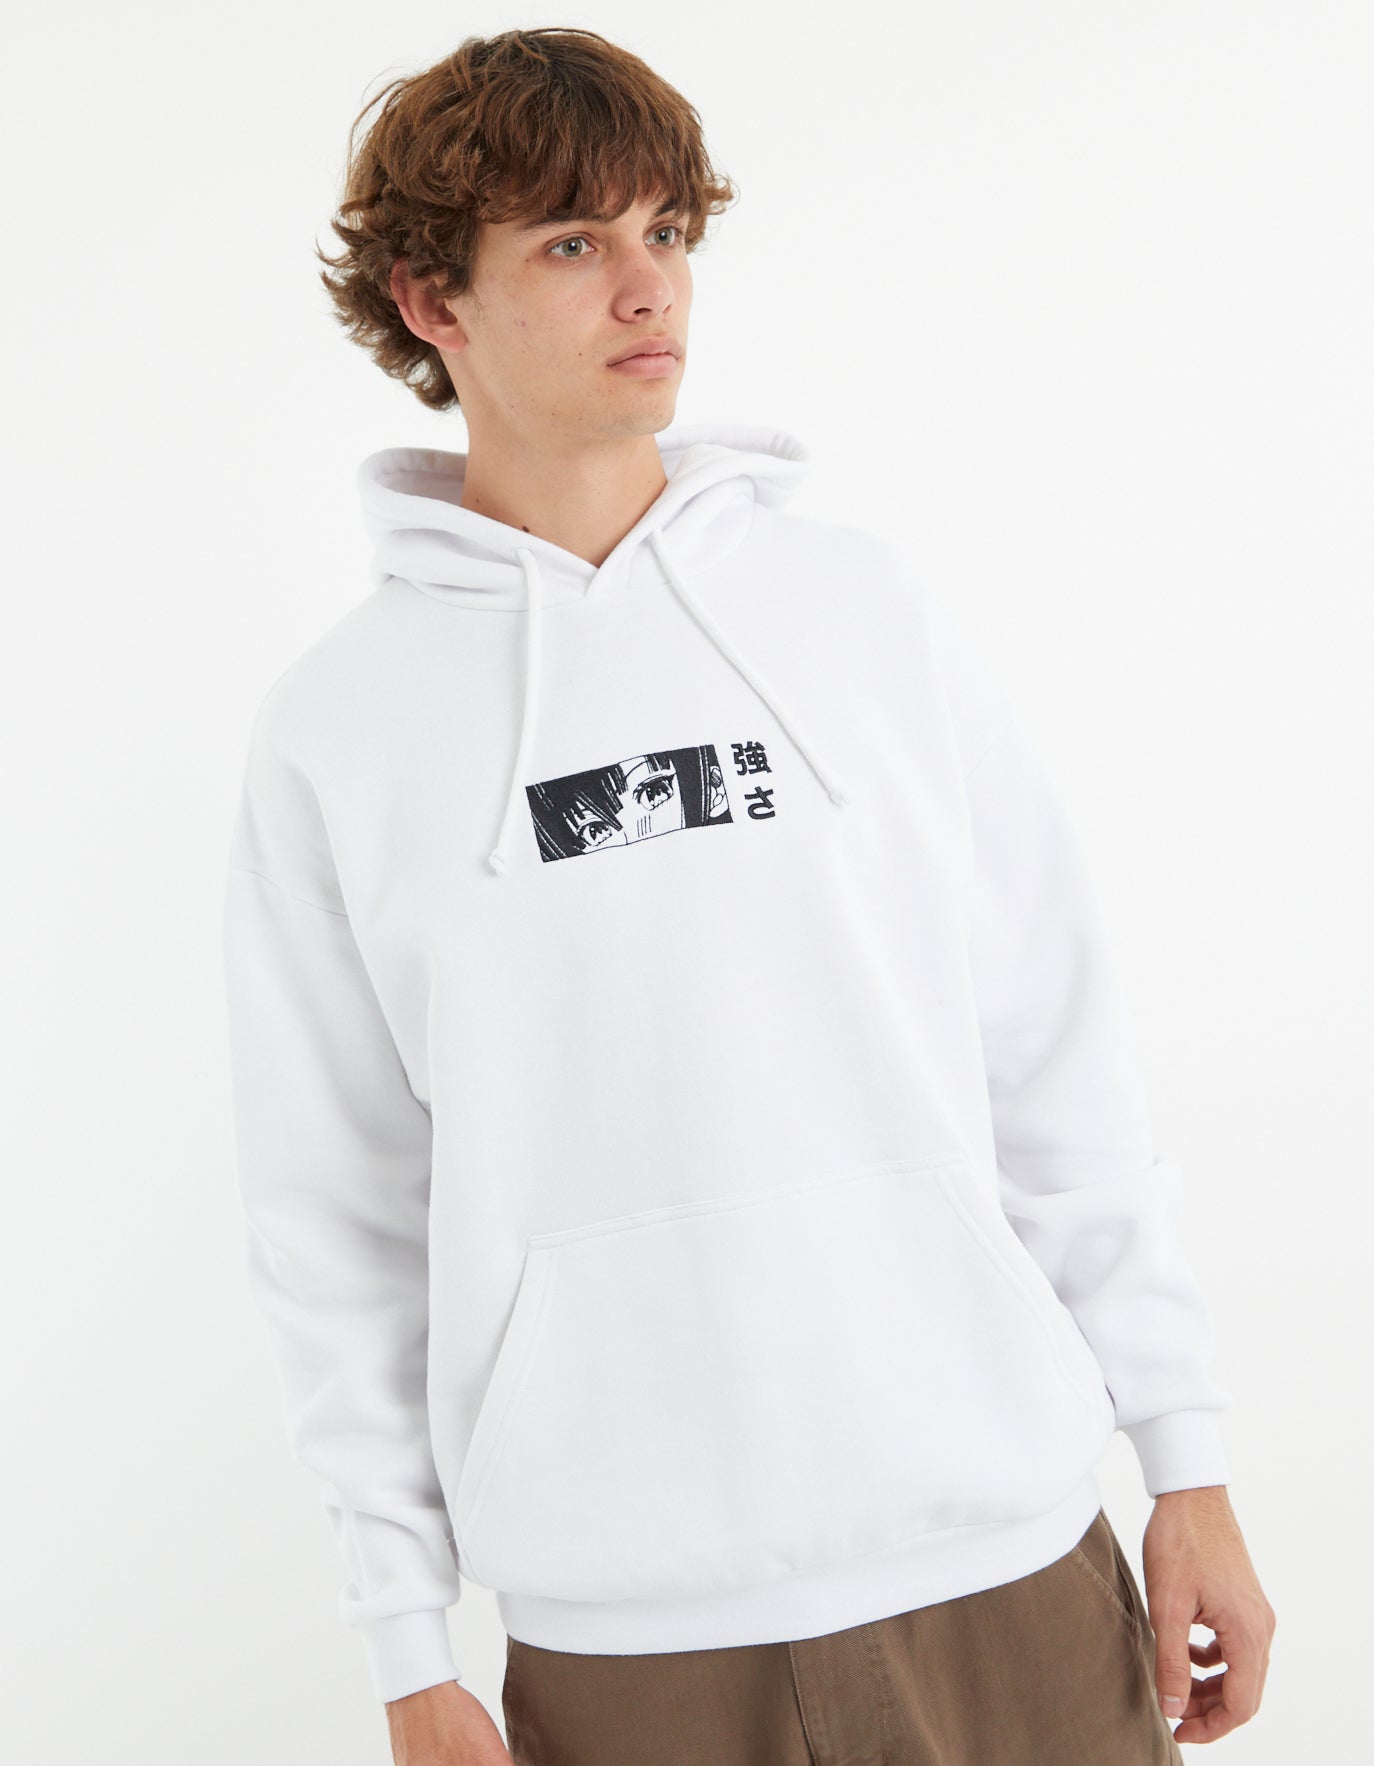 Pullover anime hoodies for men